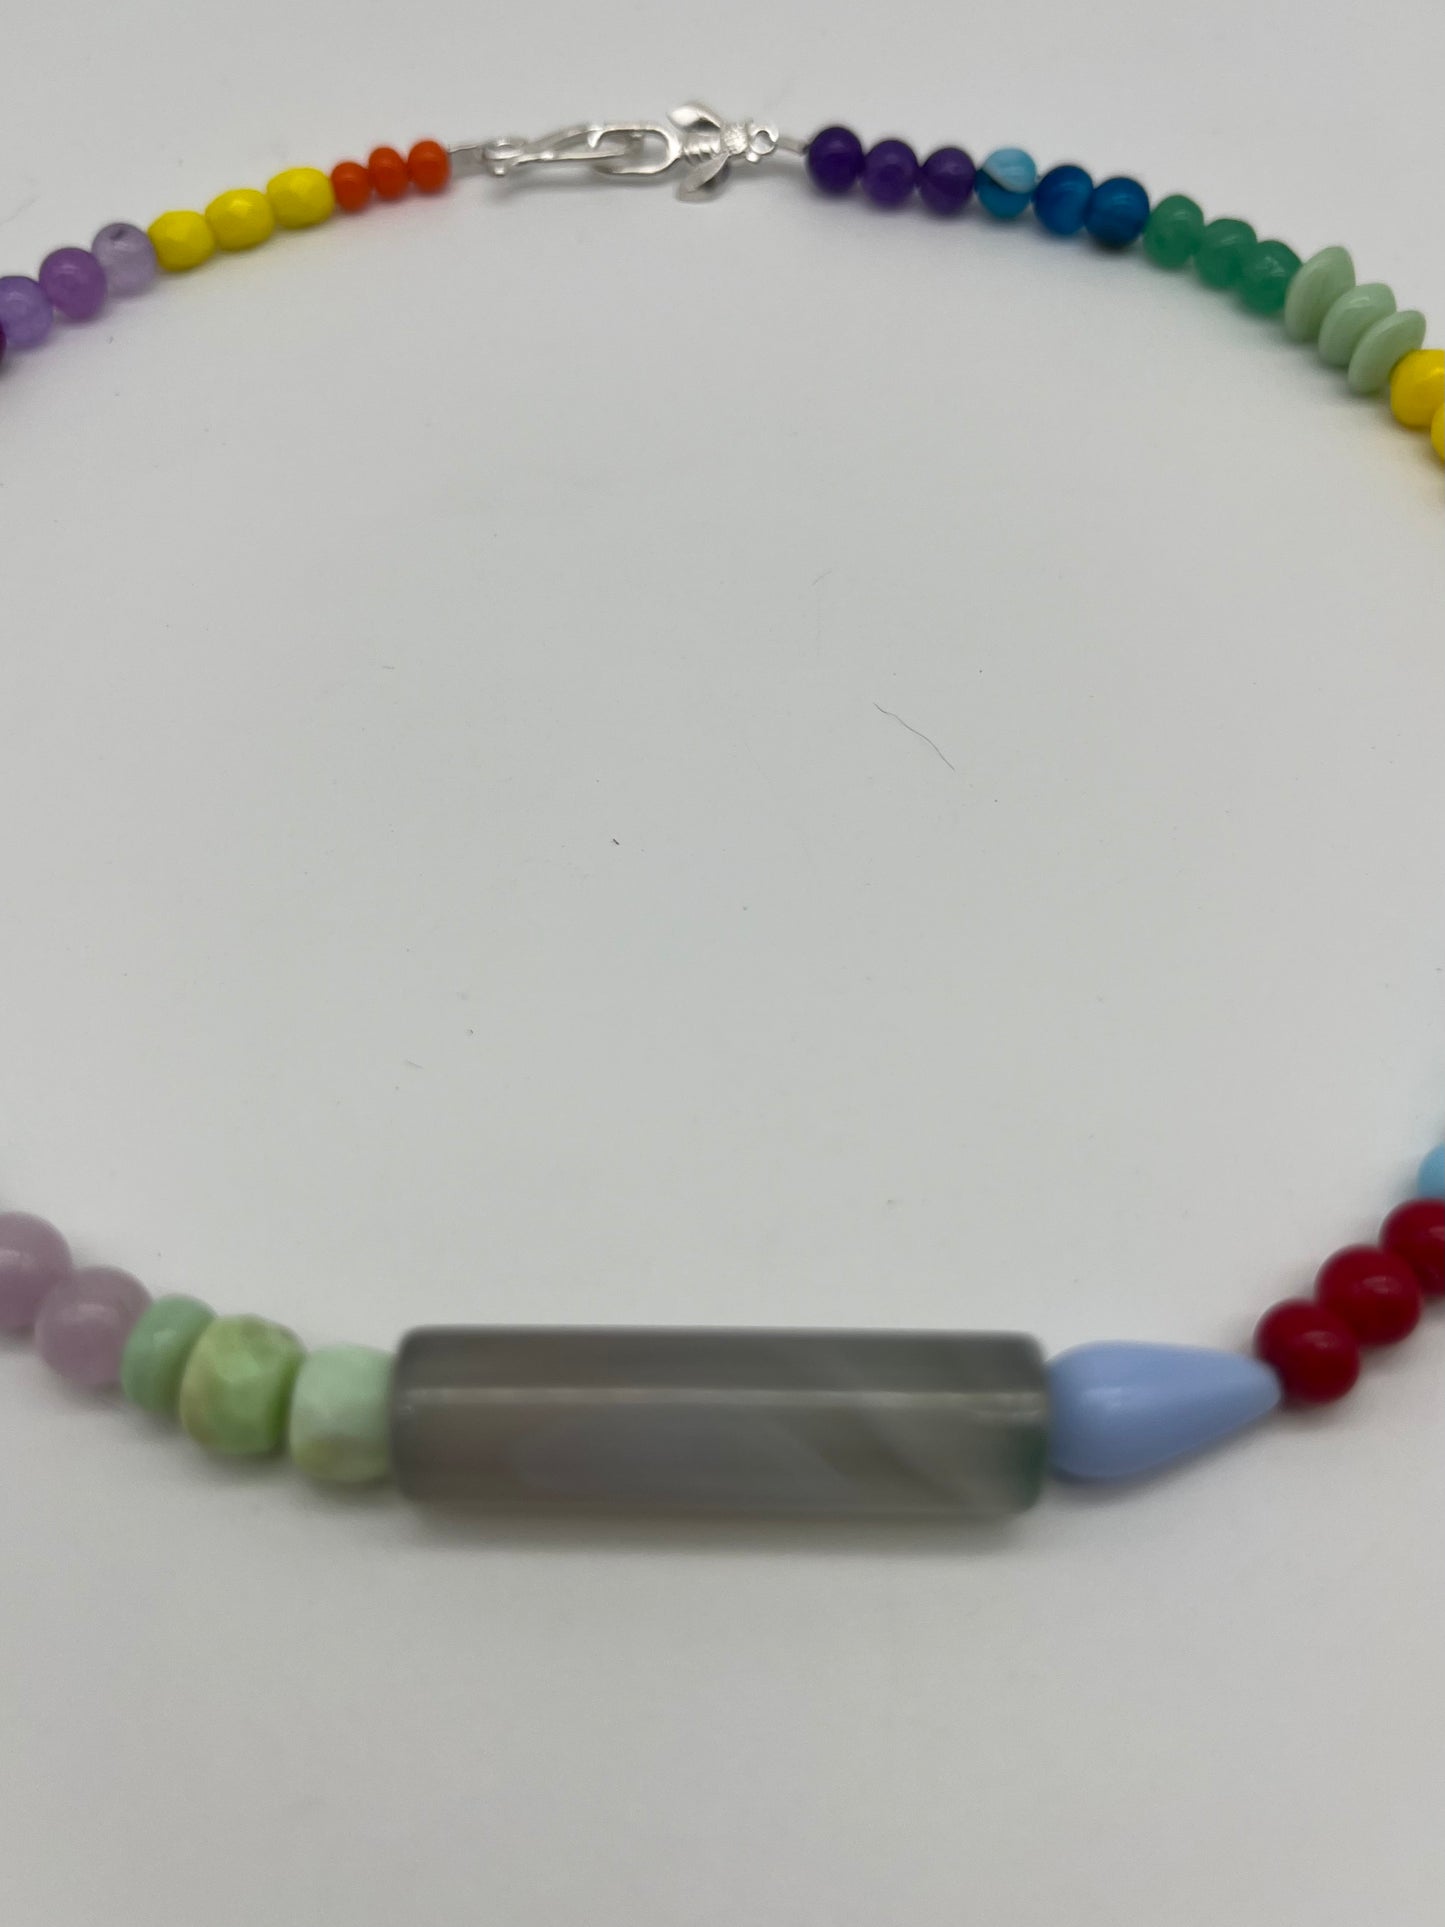 single strand ombre rainbow bead necklace with tubular grey agate